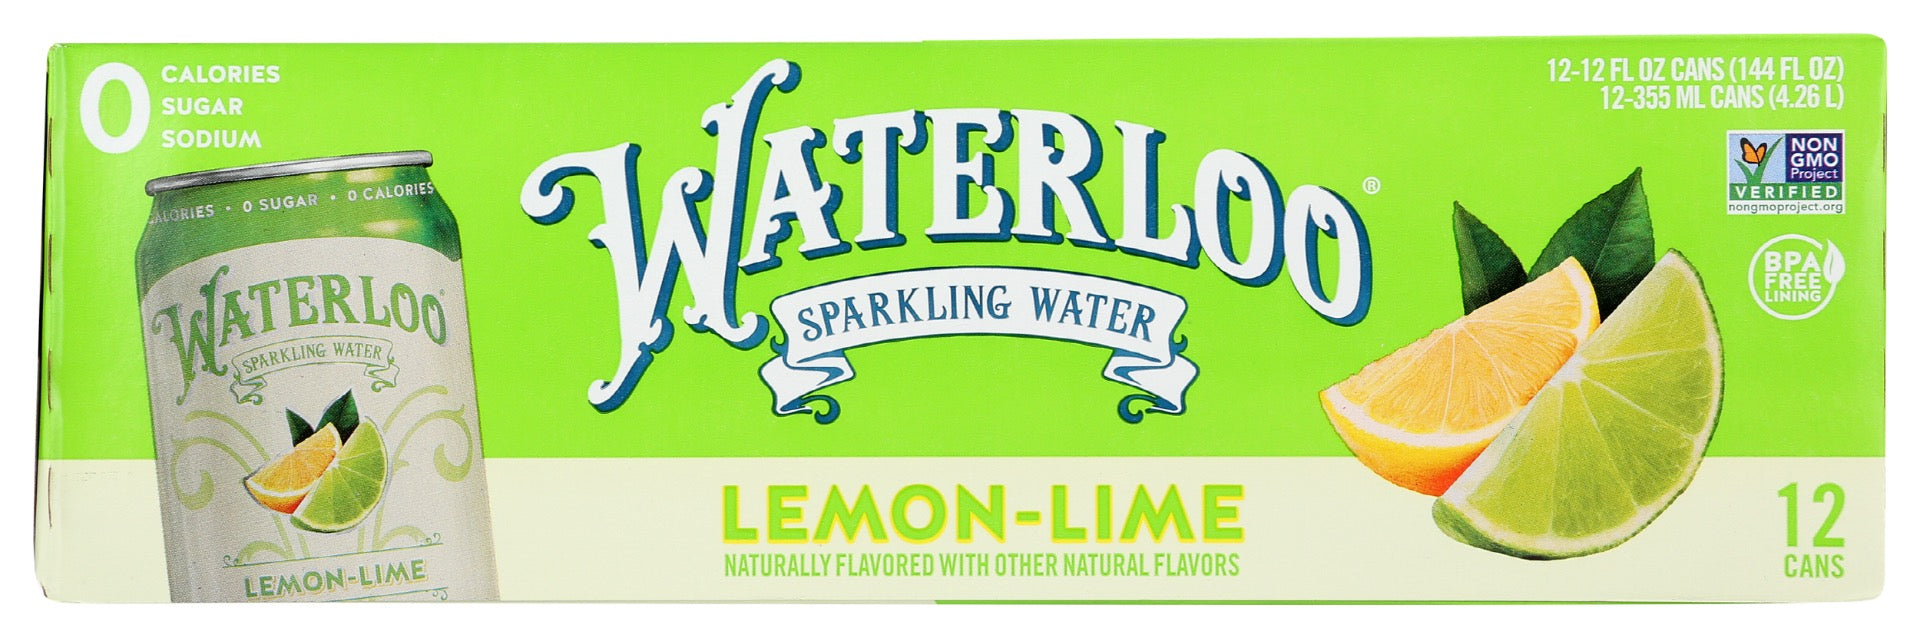 WATERLOO SPARKLING WATER: Water Sprkl Lmn Lime 12Pk, 144 fo